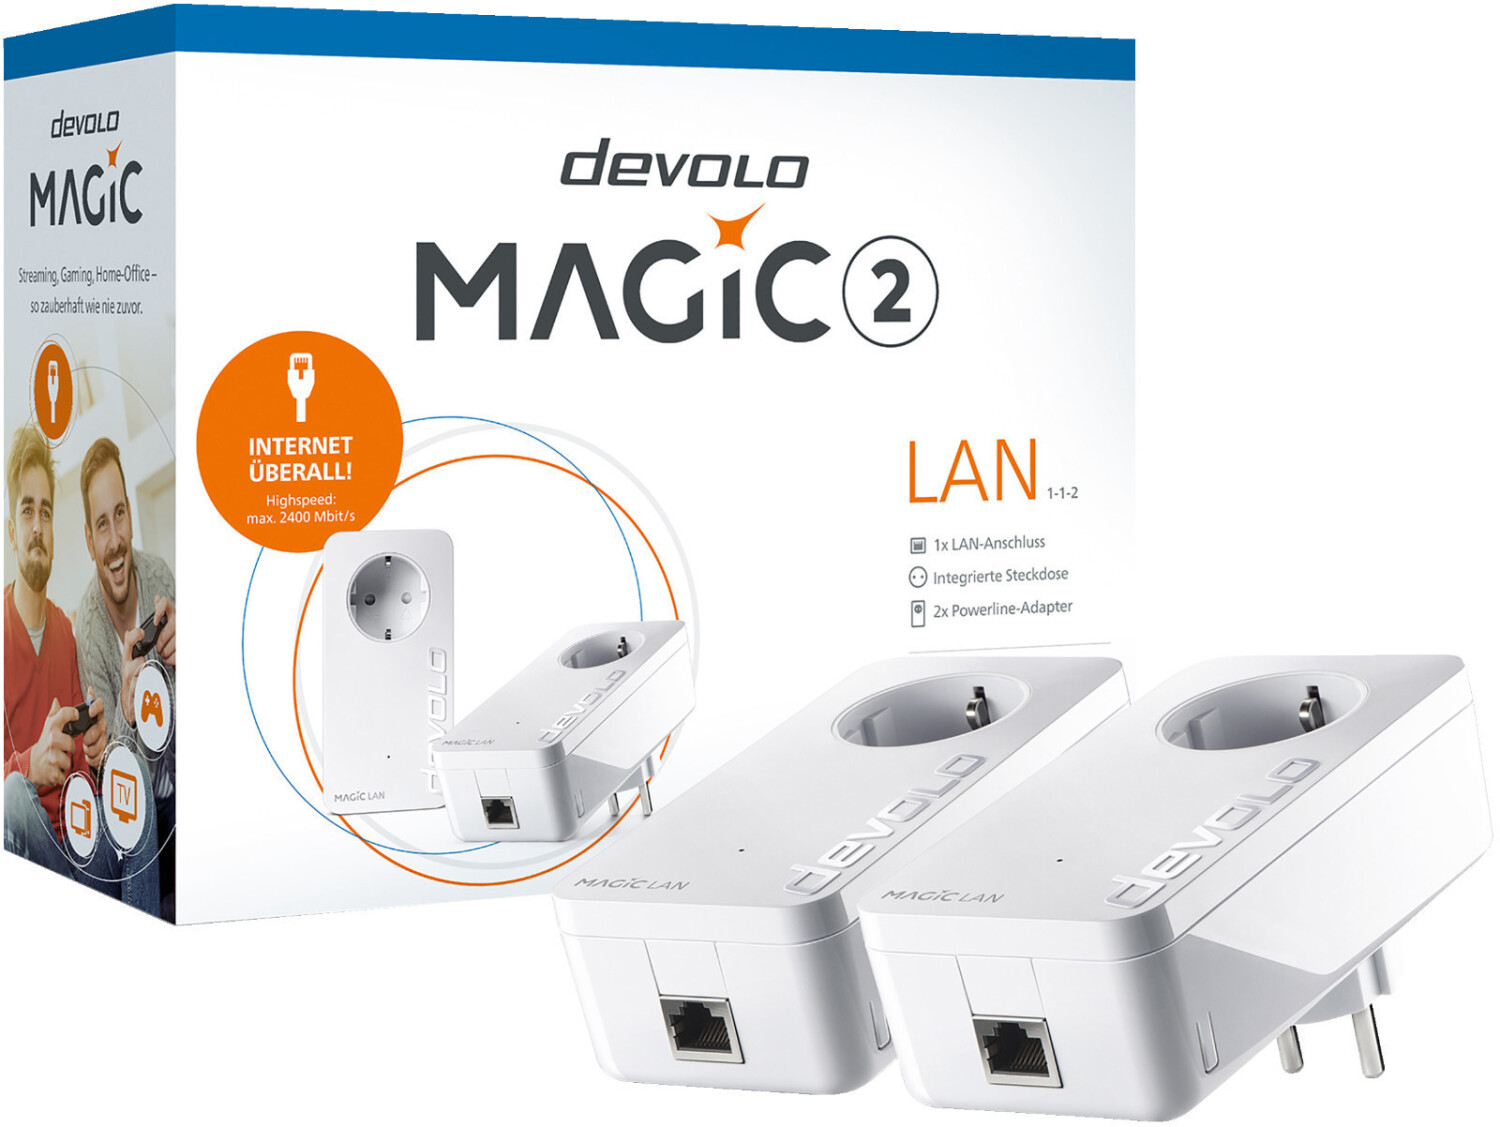 Buy devolo Magic 2 LAN Starter Kit from £99.95 (Today) – Best Deals on